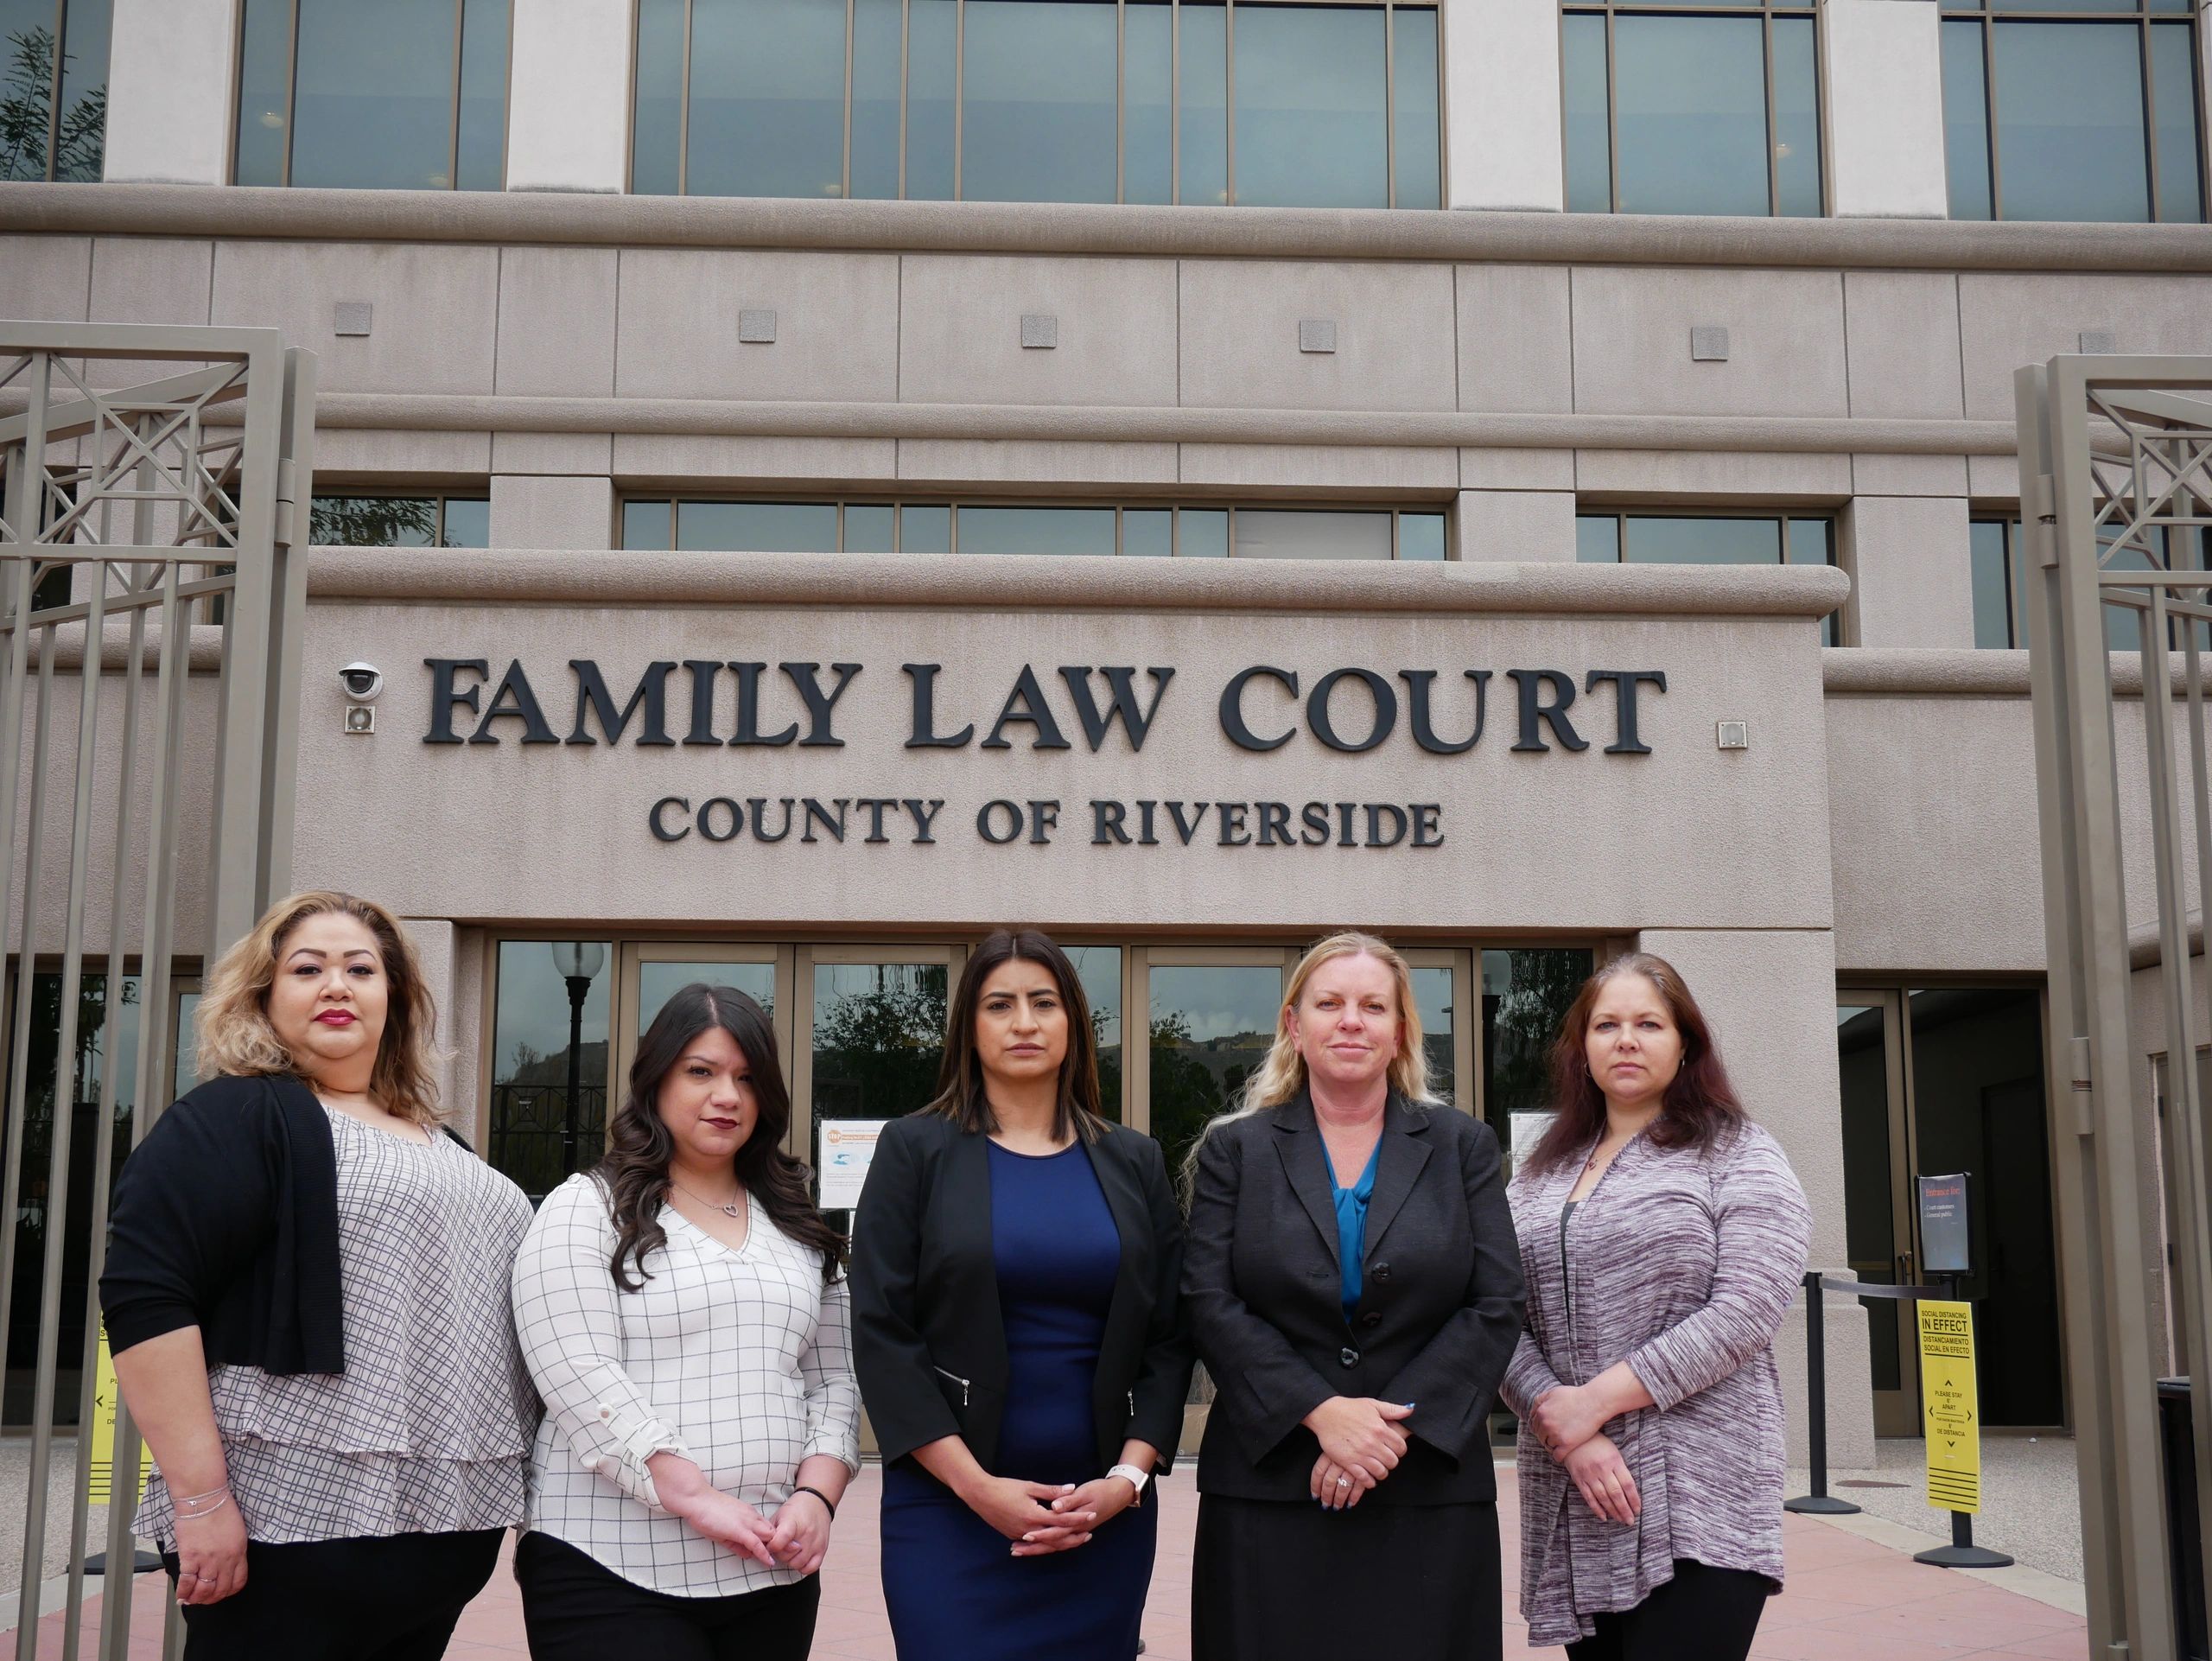 San Bernardino Family Law Attorney